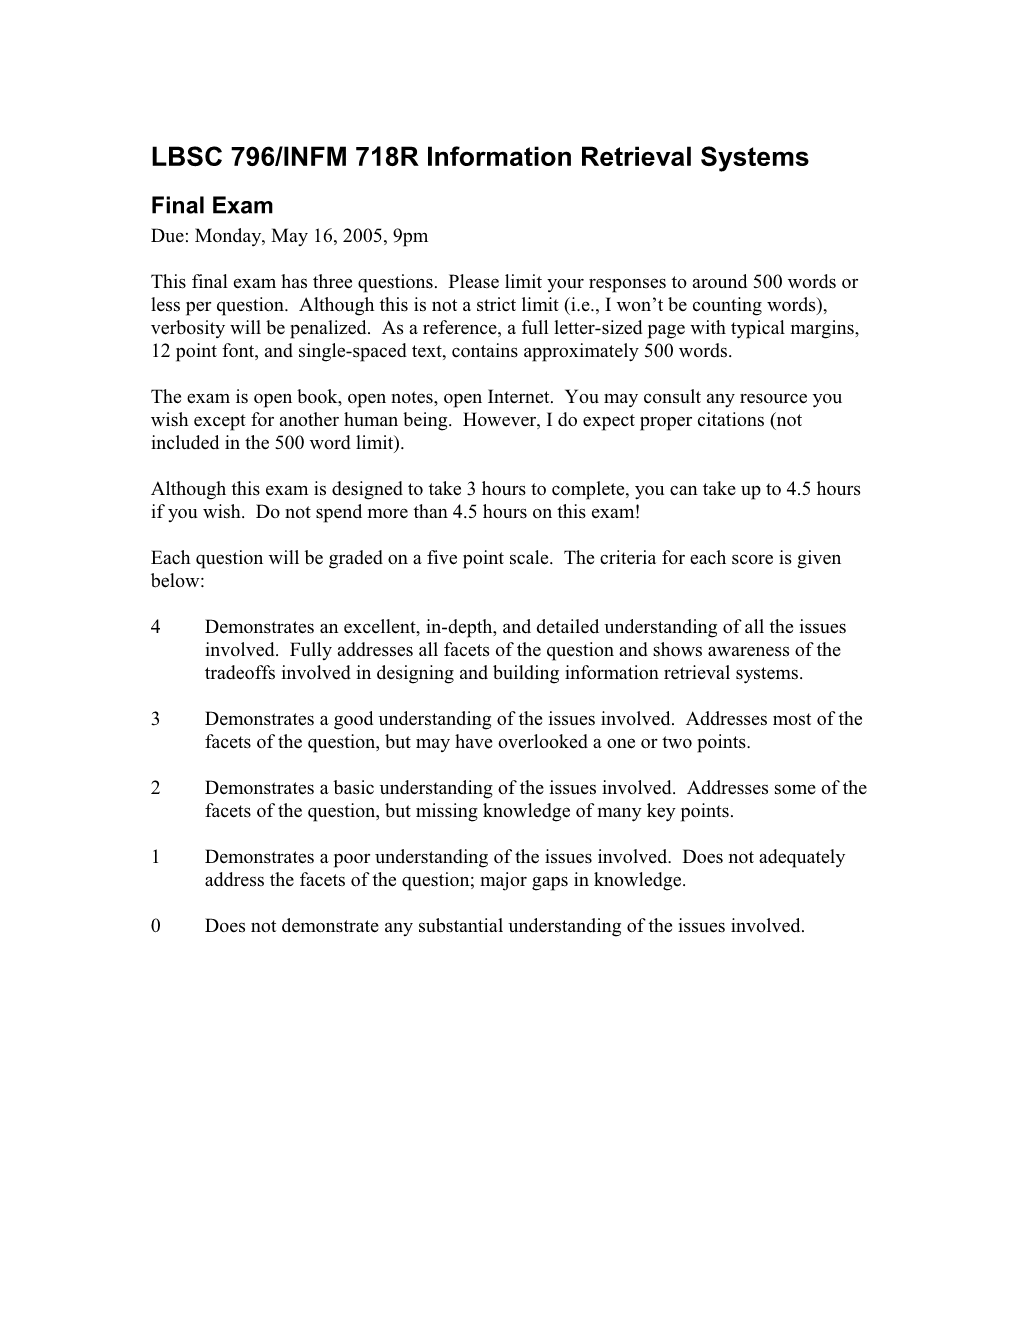 LBSC 796/INFM 718R Information Retrieval Systems